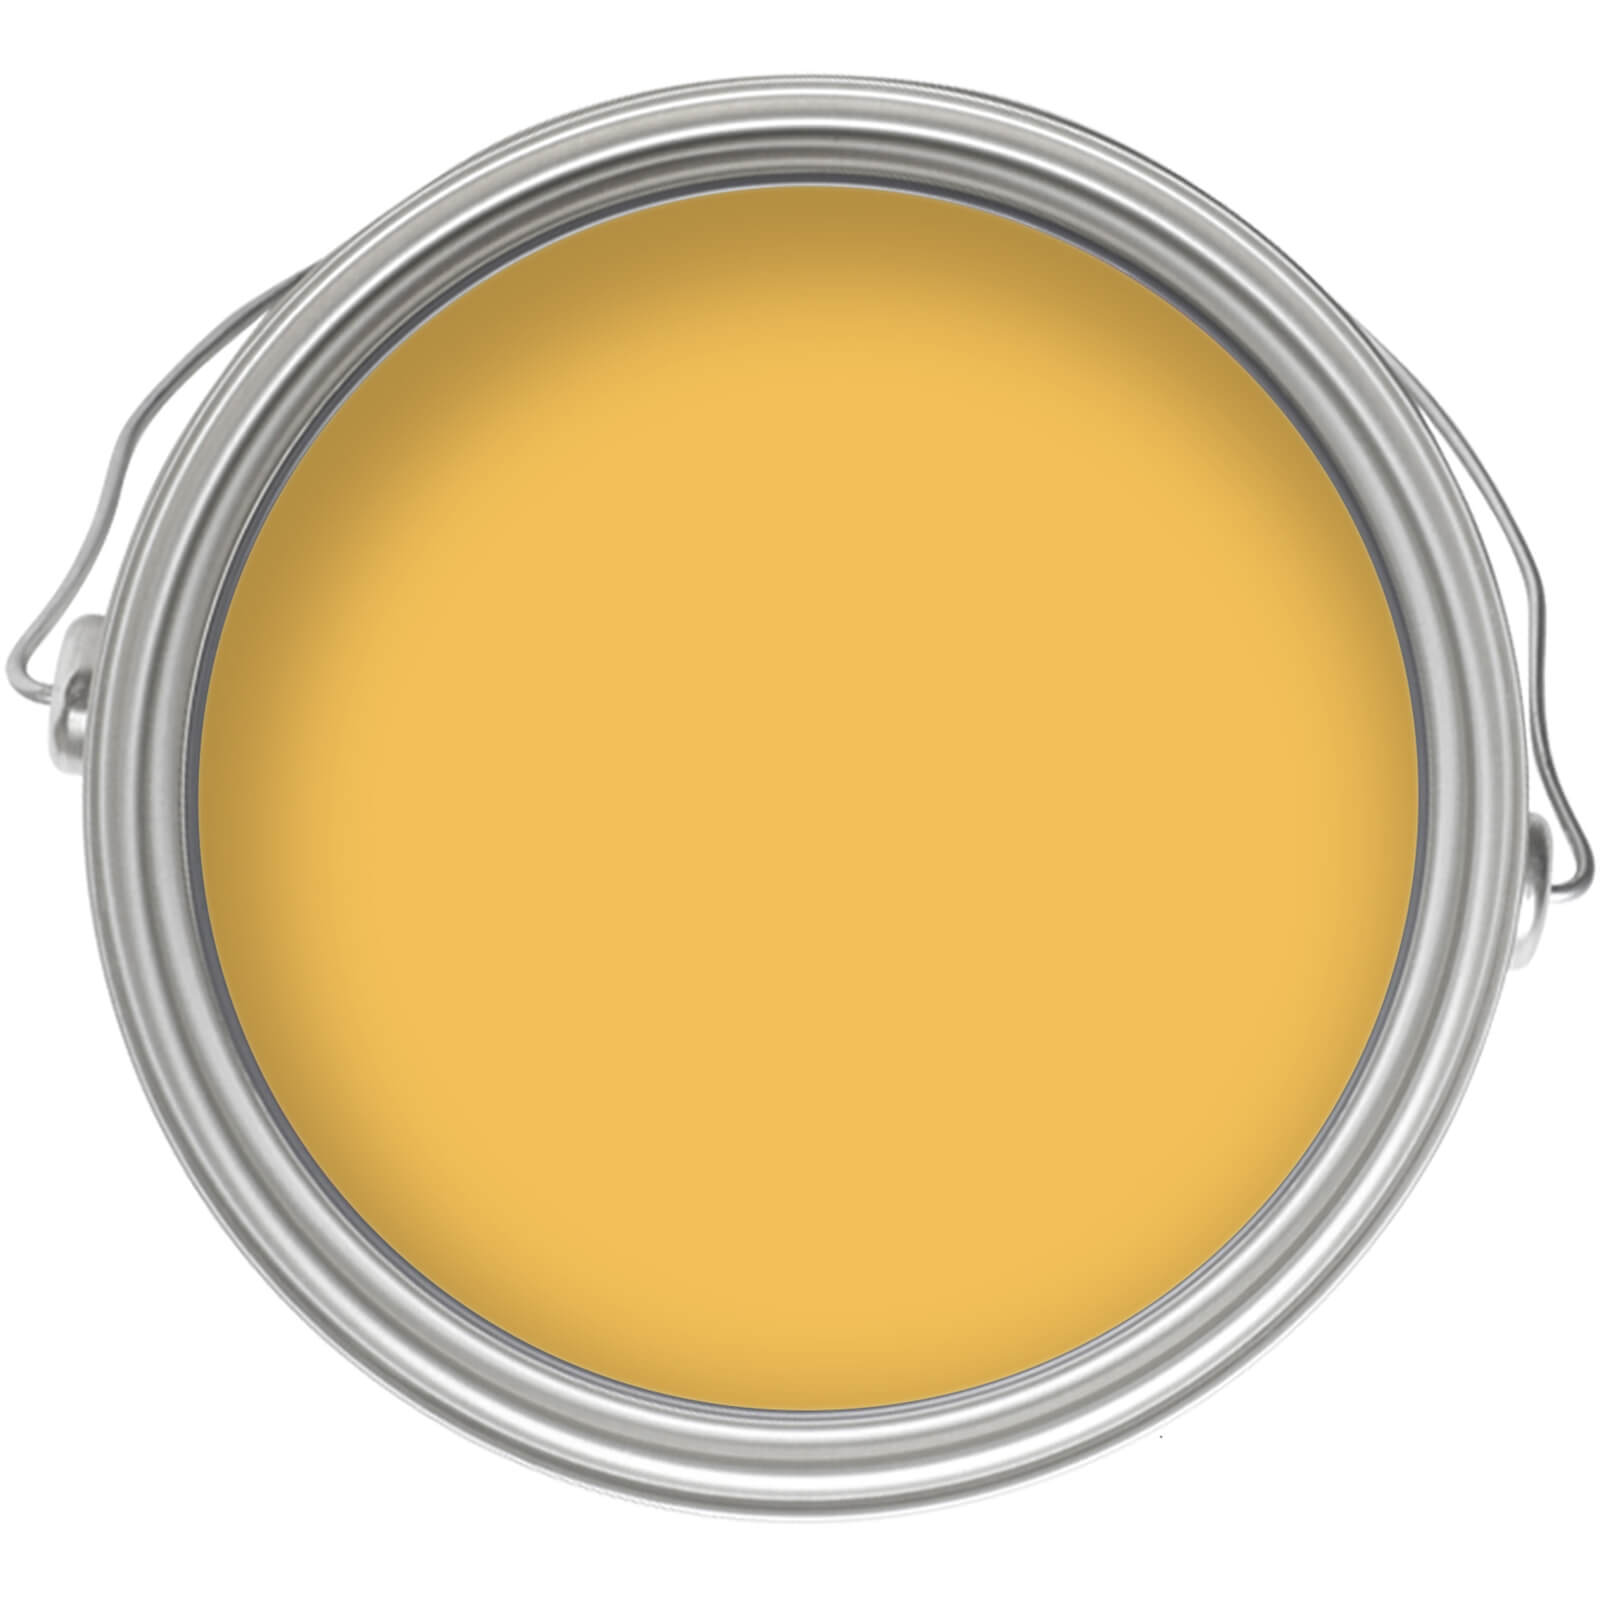 Homebase Tough & Durable Matt Paint Yellow Brick Road - 2.5L